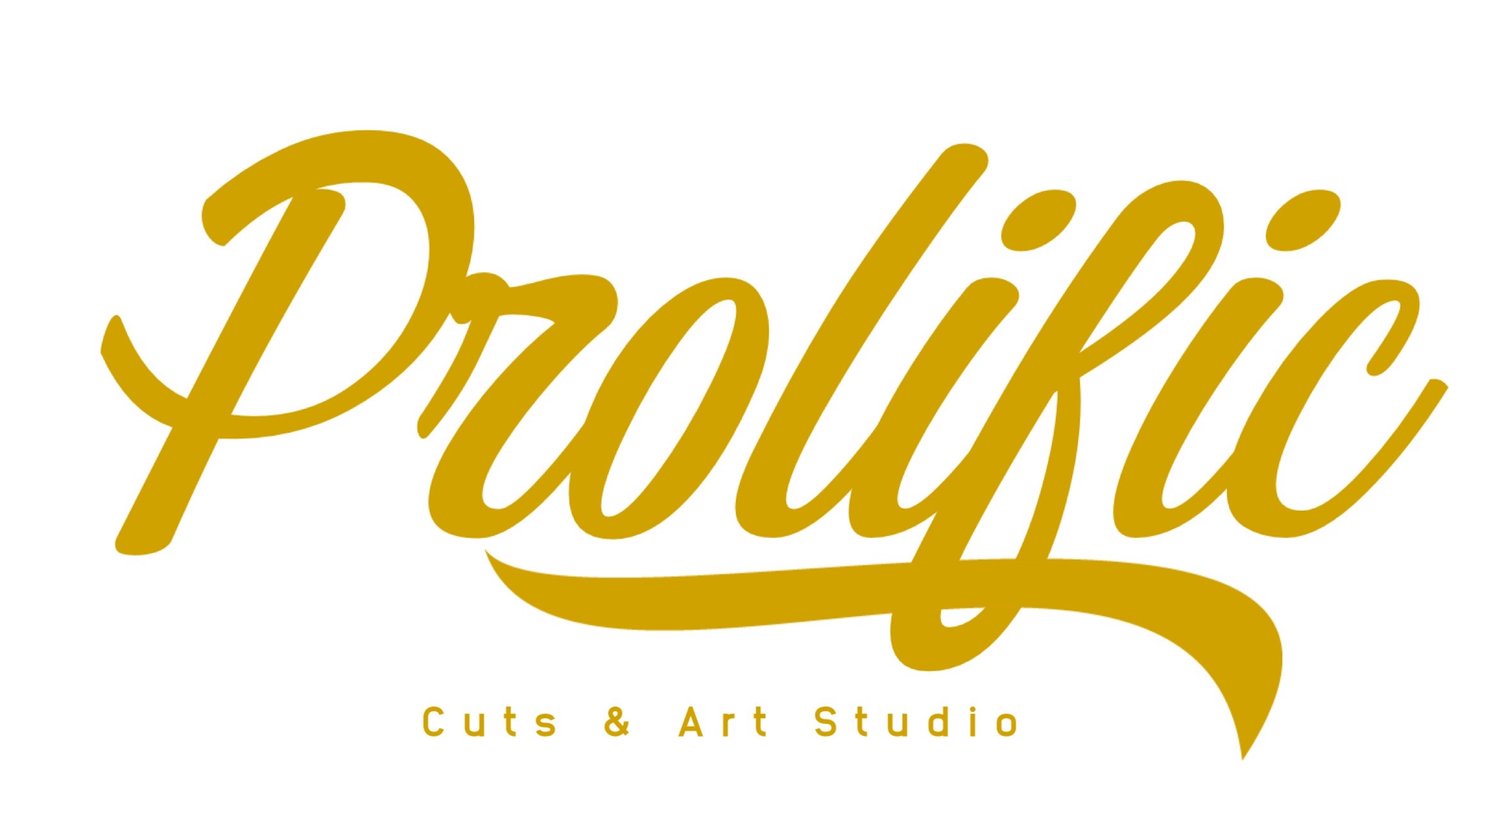 Prolific cuts and art studio